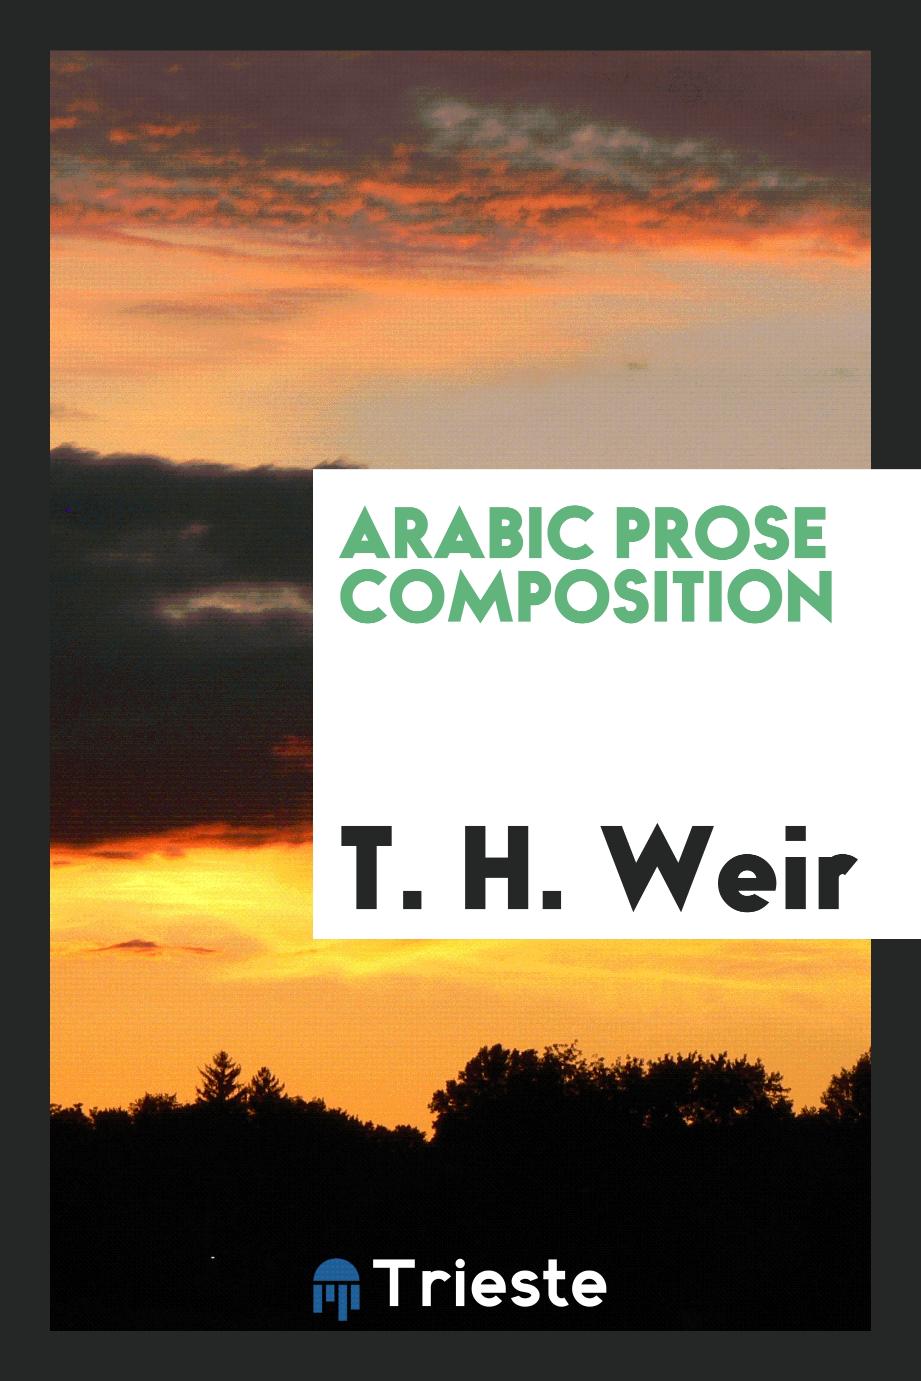 Arabic prose composition